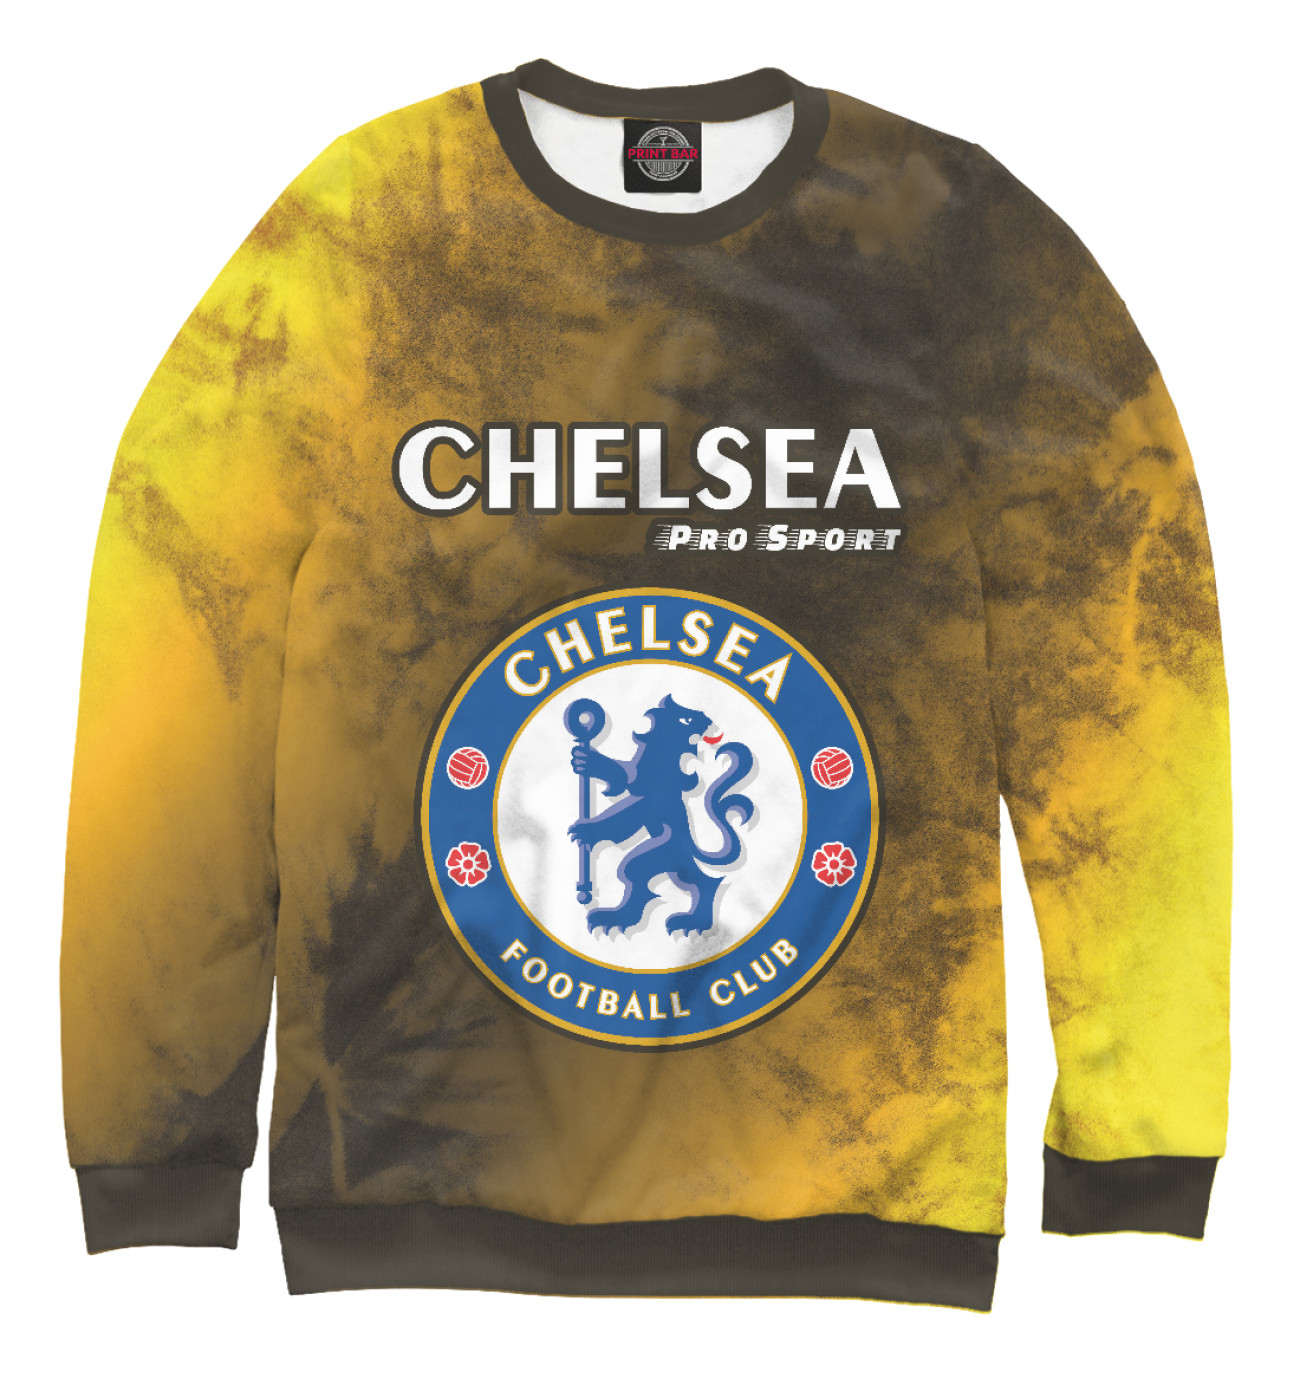 Мужской Свитшот Chelsea | Pro Sport - Tie-Dye, артикул: CHL-235183-swi-2